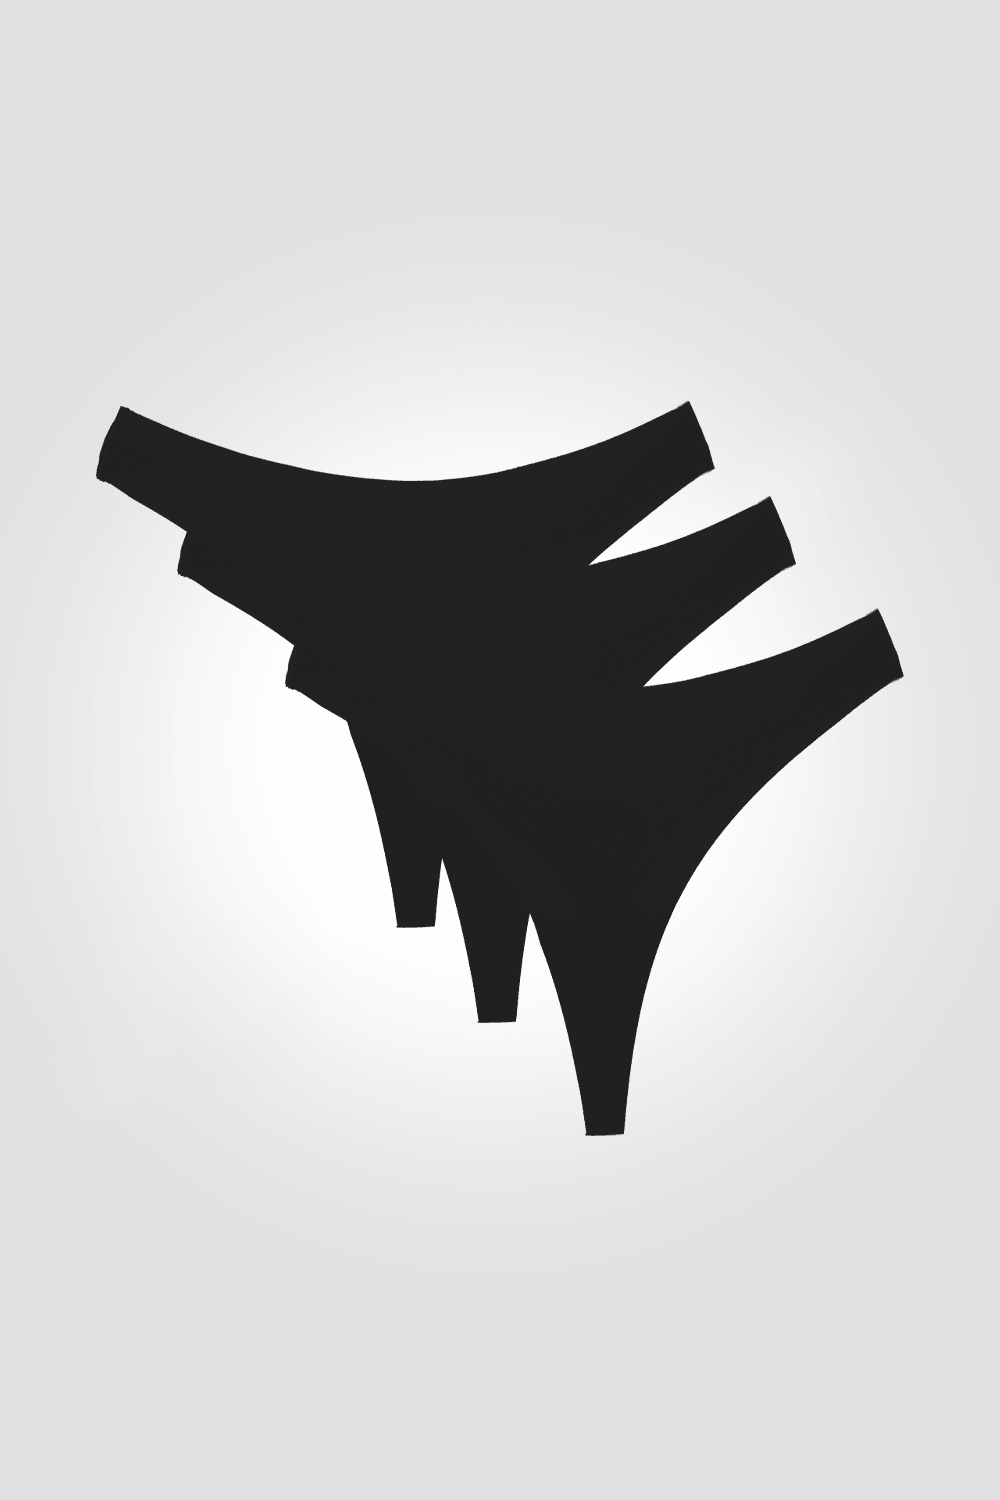 DELTA - שלישיית תחתוני חוטיני NO SHOW בצבע שחור - MASHBIR//365